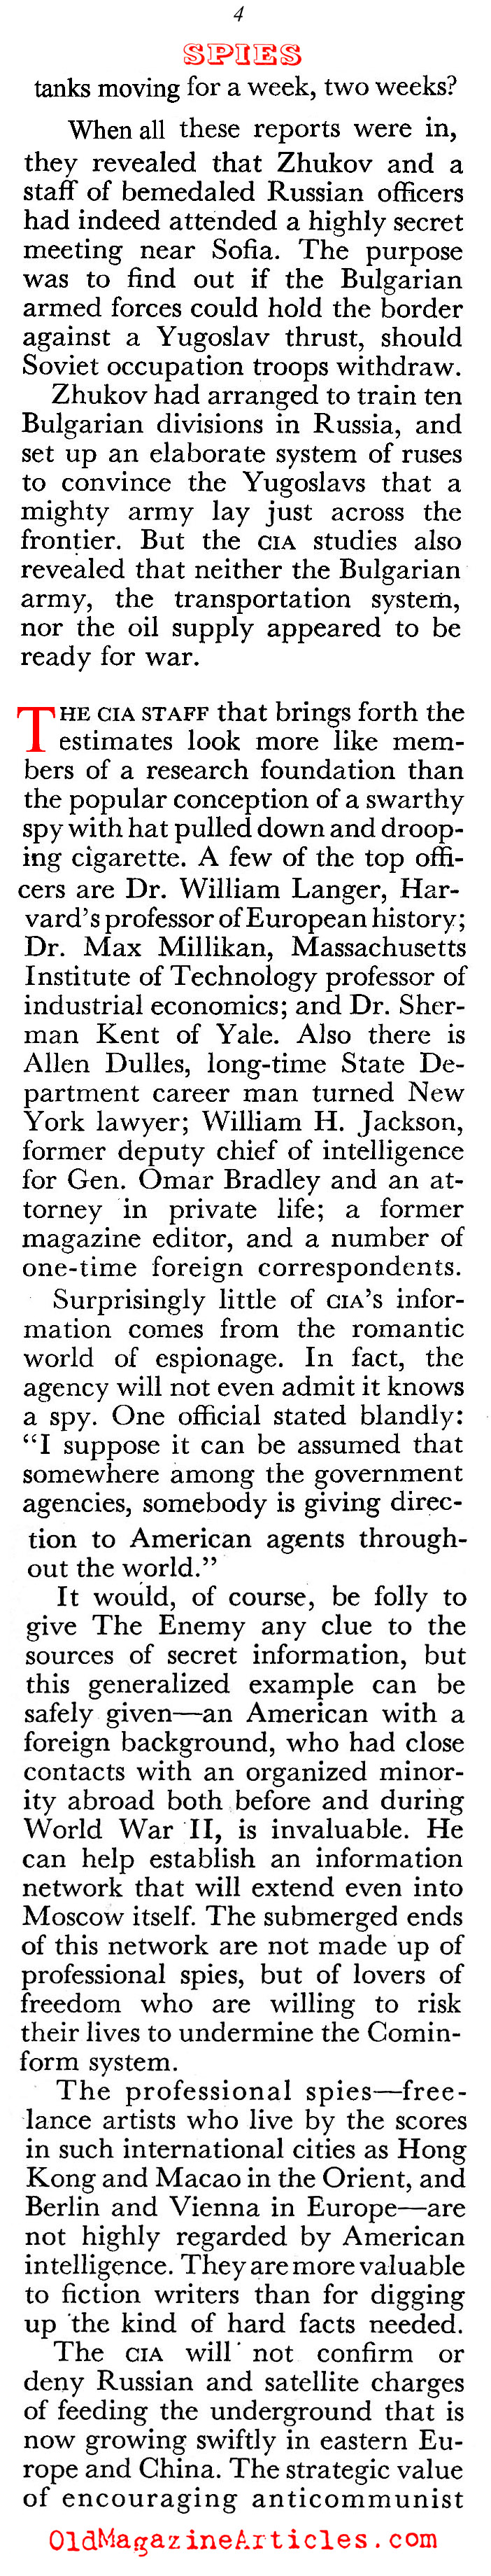 The Early CIA (Coronet Magazine, 1951)